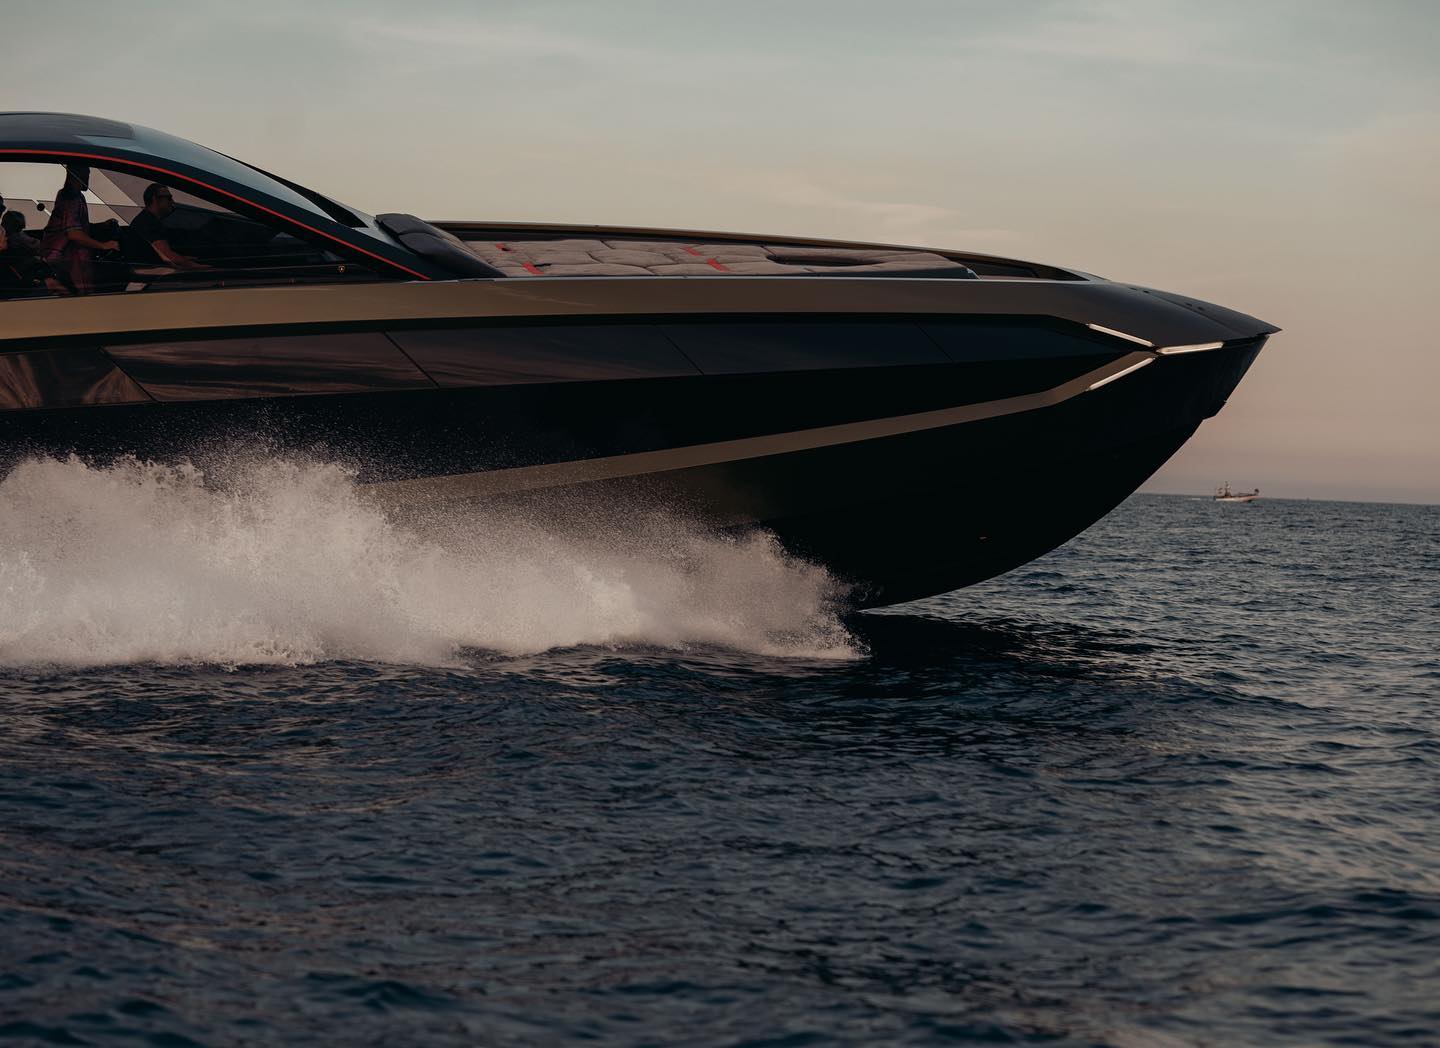 Фото из соцстей: новая яхта Конора Lamborghini. Стоит 3 млн евро!